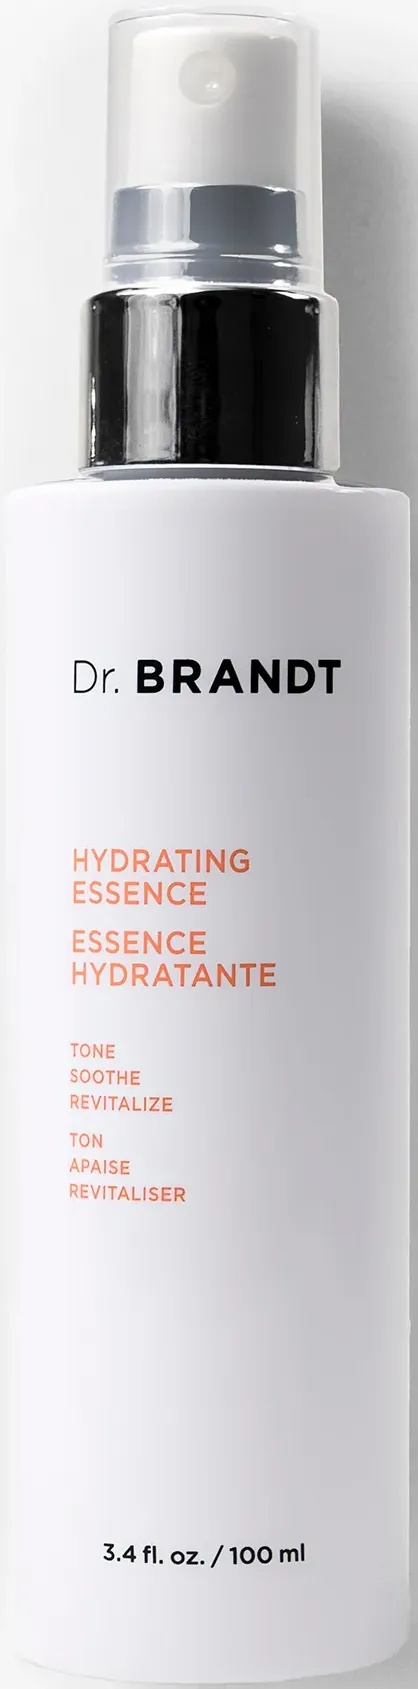 Dr. Brandt Hydrating Essence